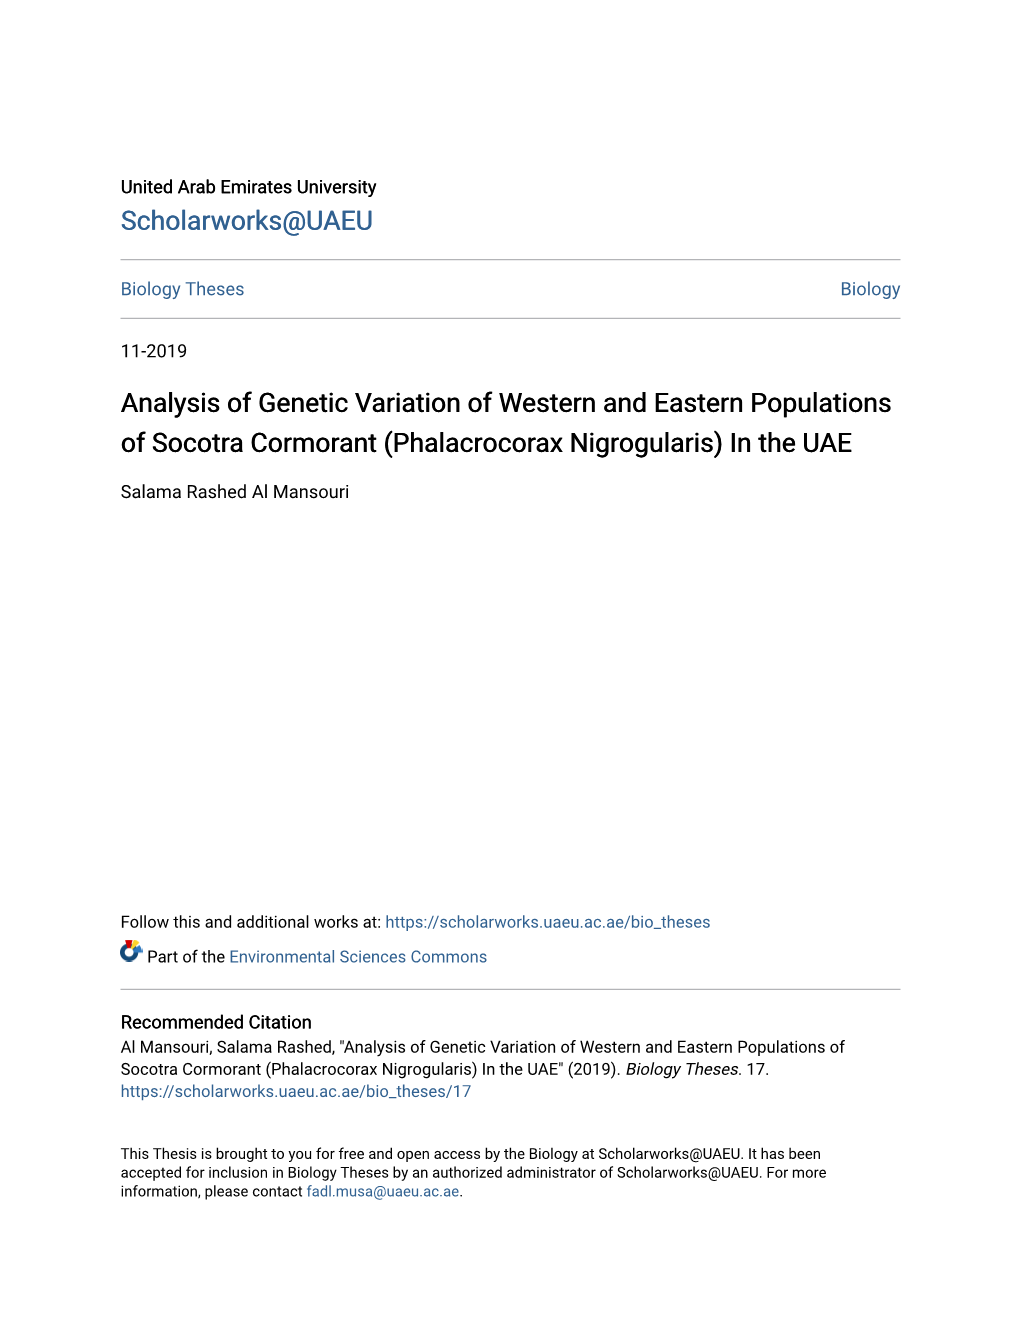 Analysis of Genetic Variation of Western and Eastern Populations of Socotra Cormorant (Phalacrocorax Nigrogularis) in the UAE